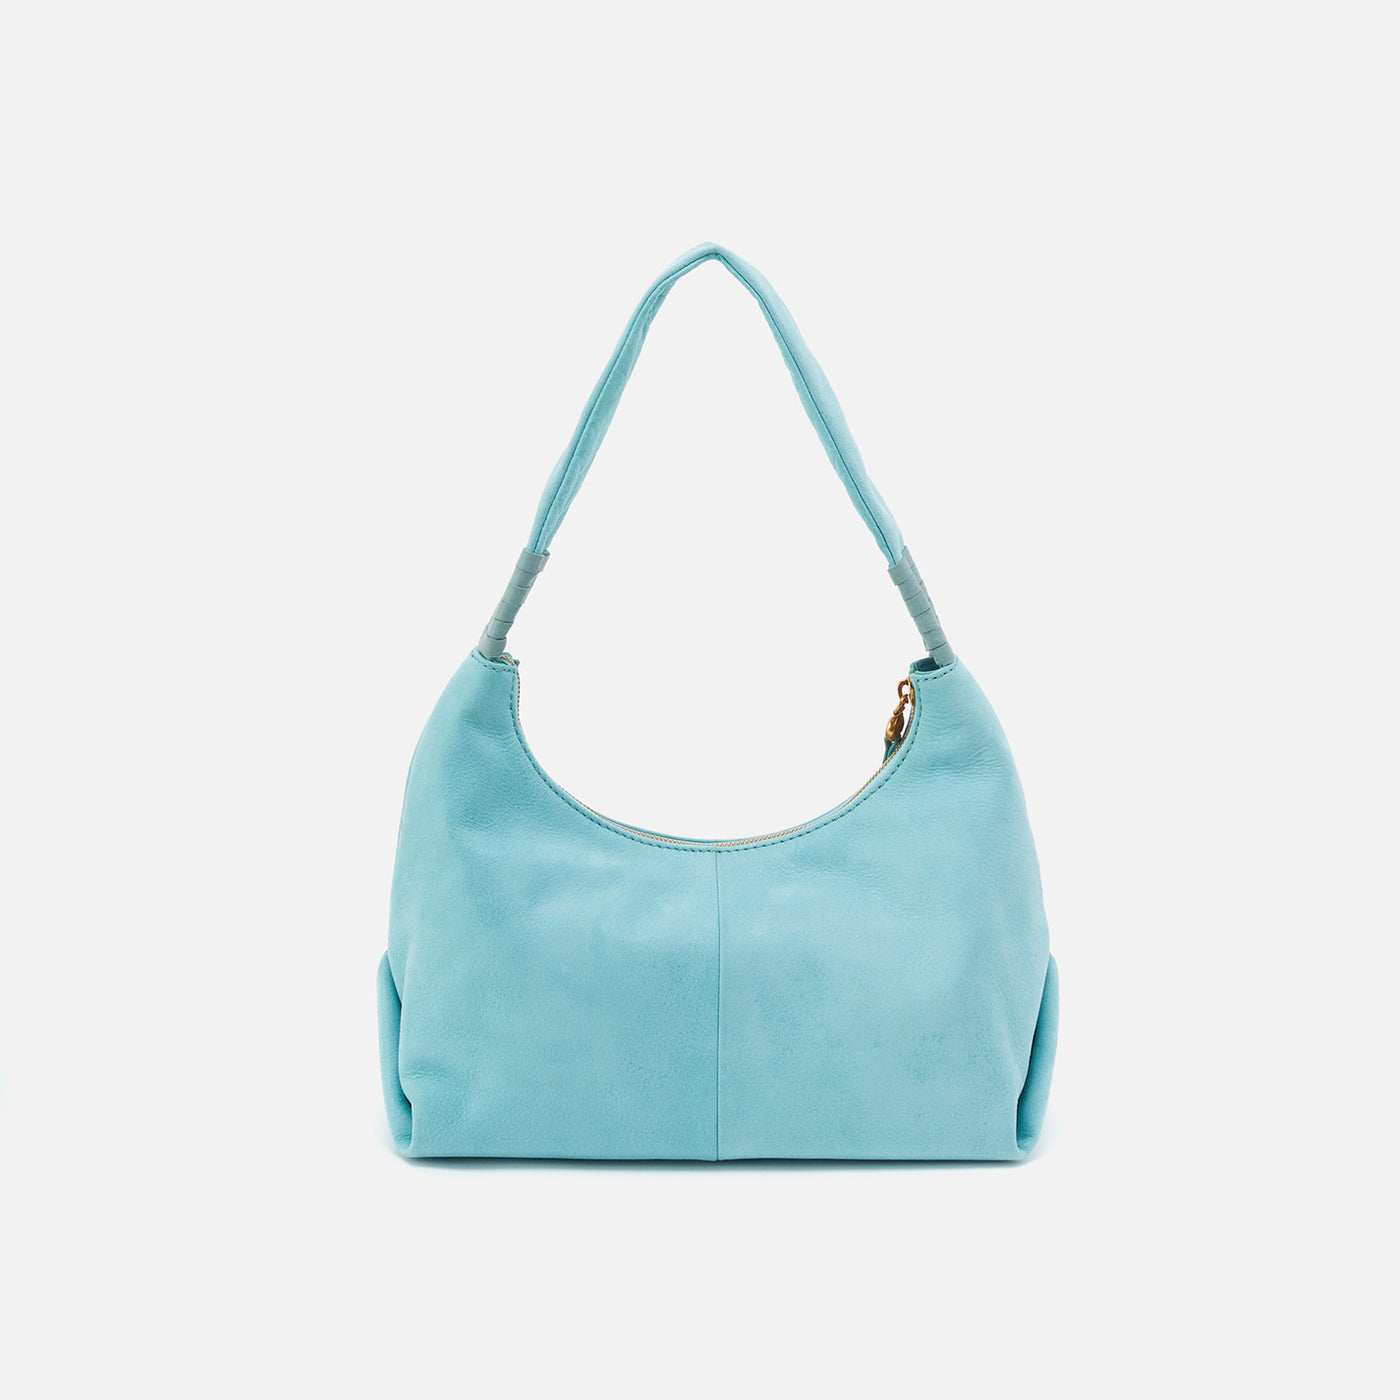 Astrid Shoulder Bag in Buffed Leather - Caribbean Blue